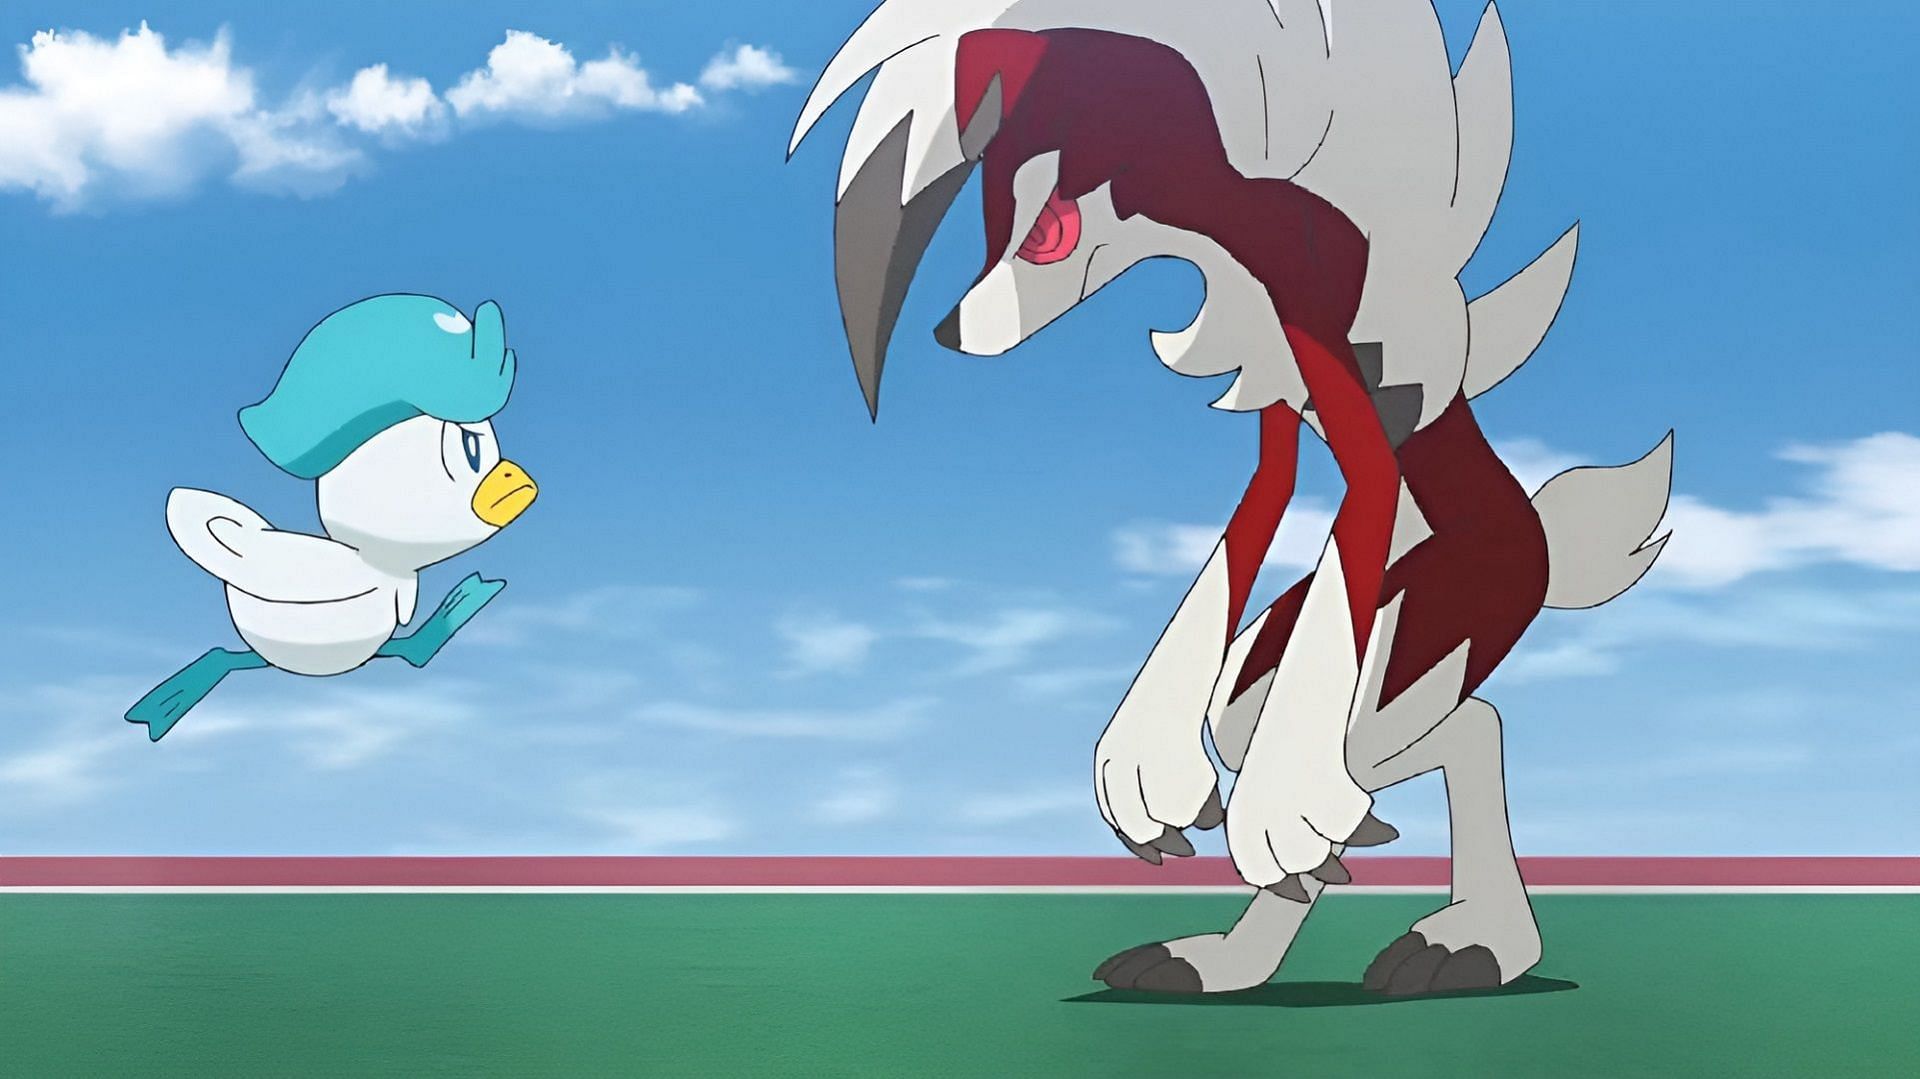 Quaxly and Lycanroc battle in Pokemon Horizons Episode 41 (Image via The Pokemon Company)